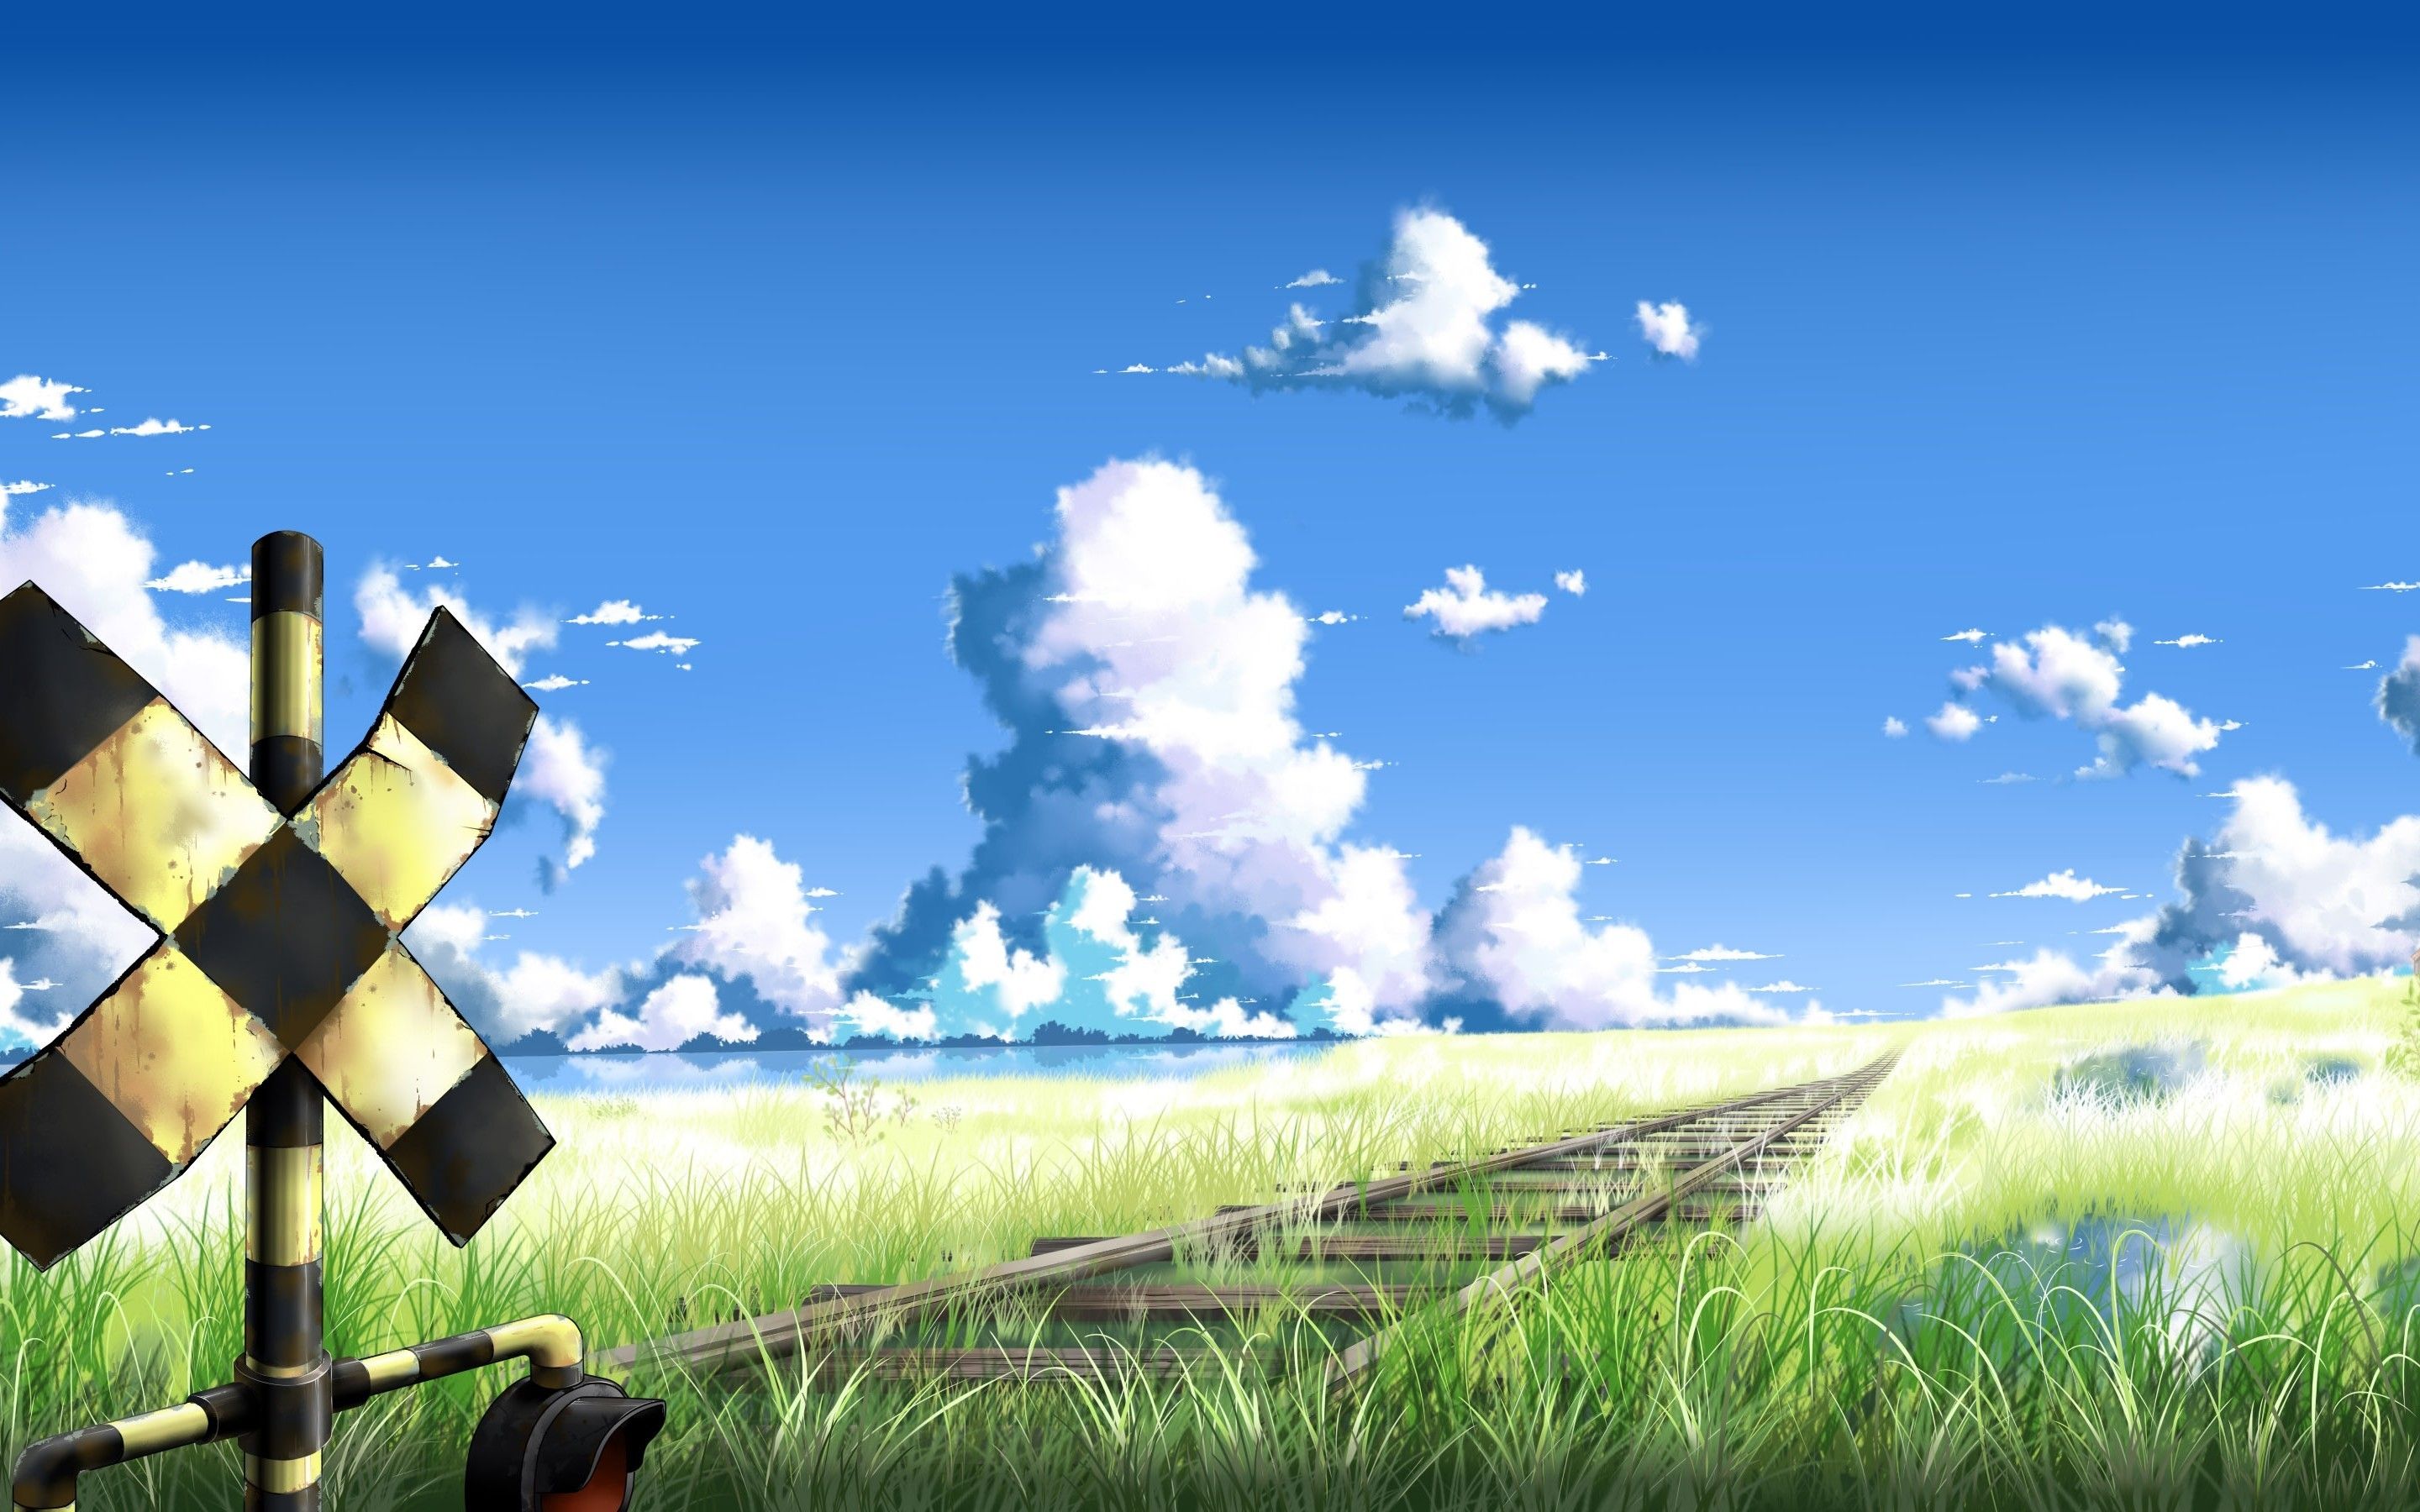 Download 2880x1800 Anime Landscape, Railway, Field, Grass, Clouds